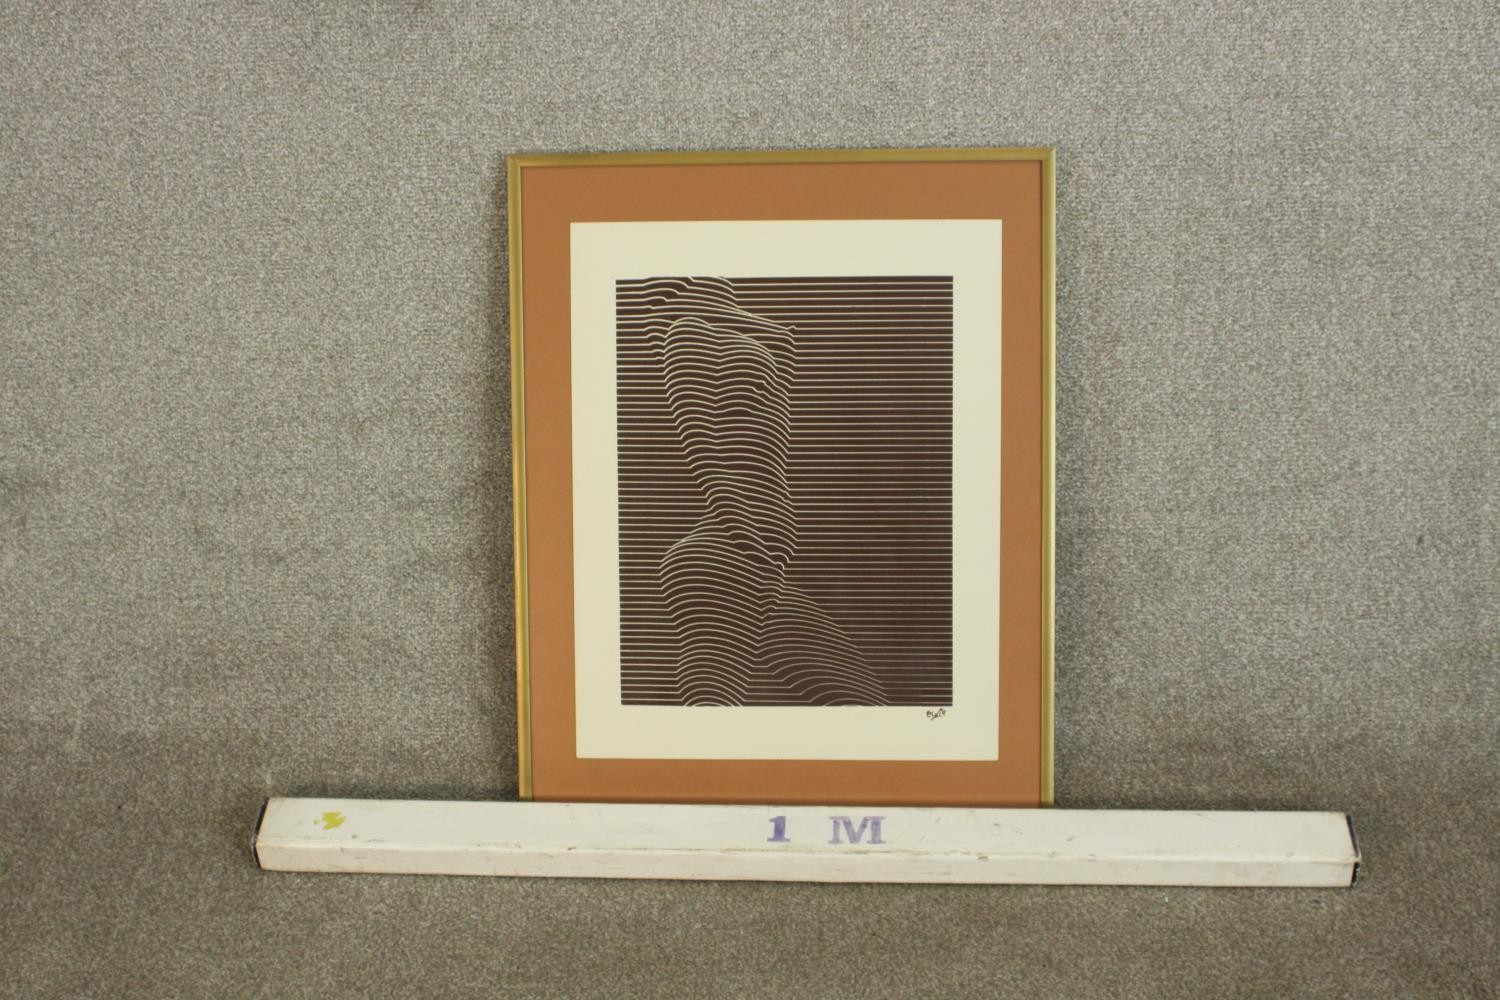 Elvir XXth, 'Kinetic Nude', print, signed. H.61 W.49cm. - Image 3 of 6